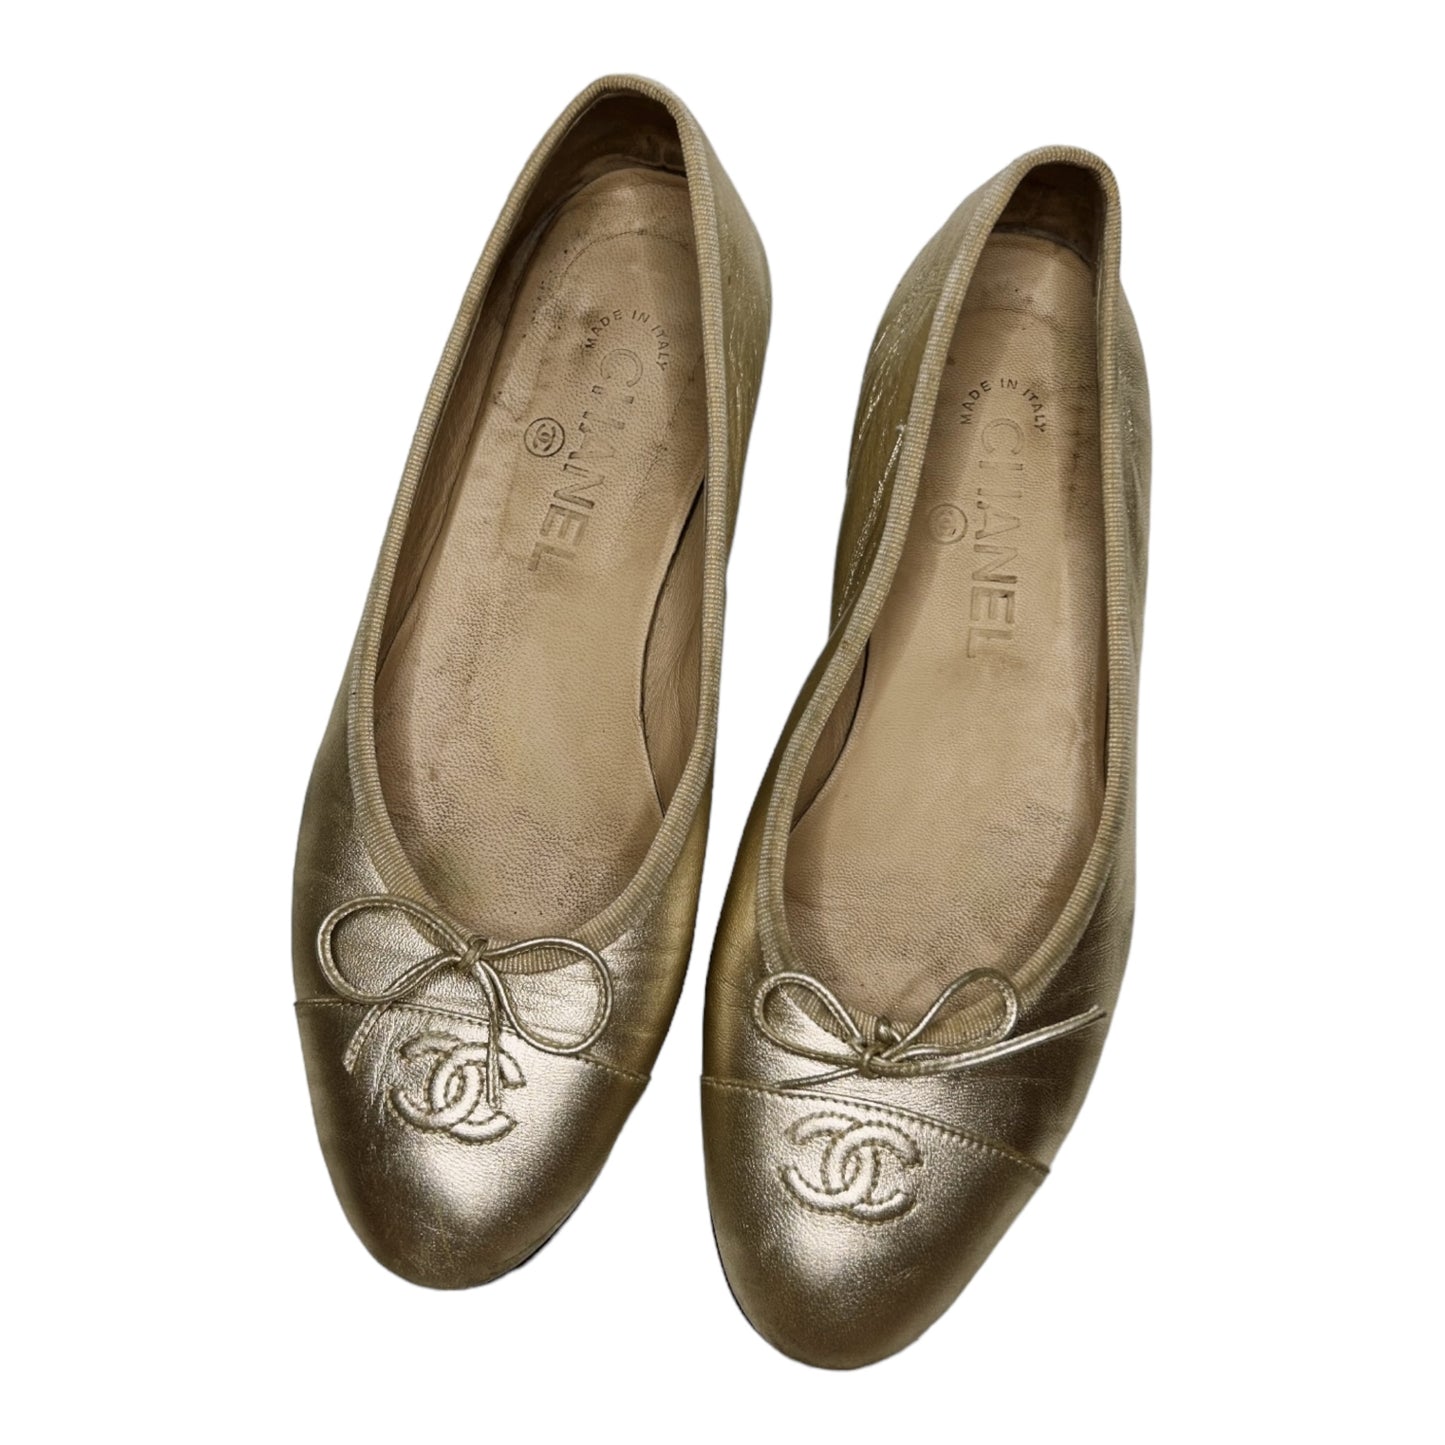 Vintage Chanel metallic CC interlocking logo ballerinas/38